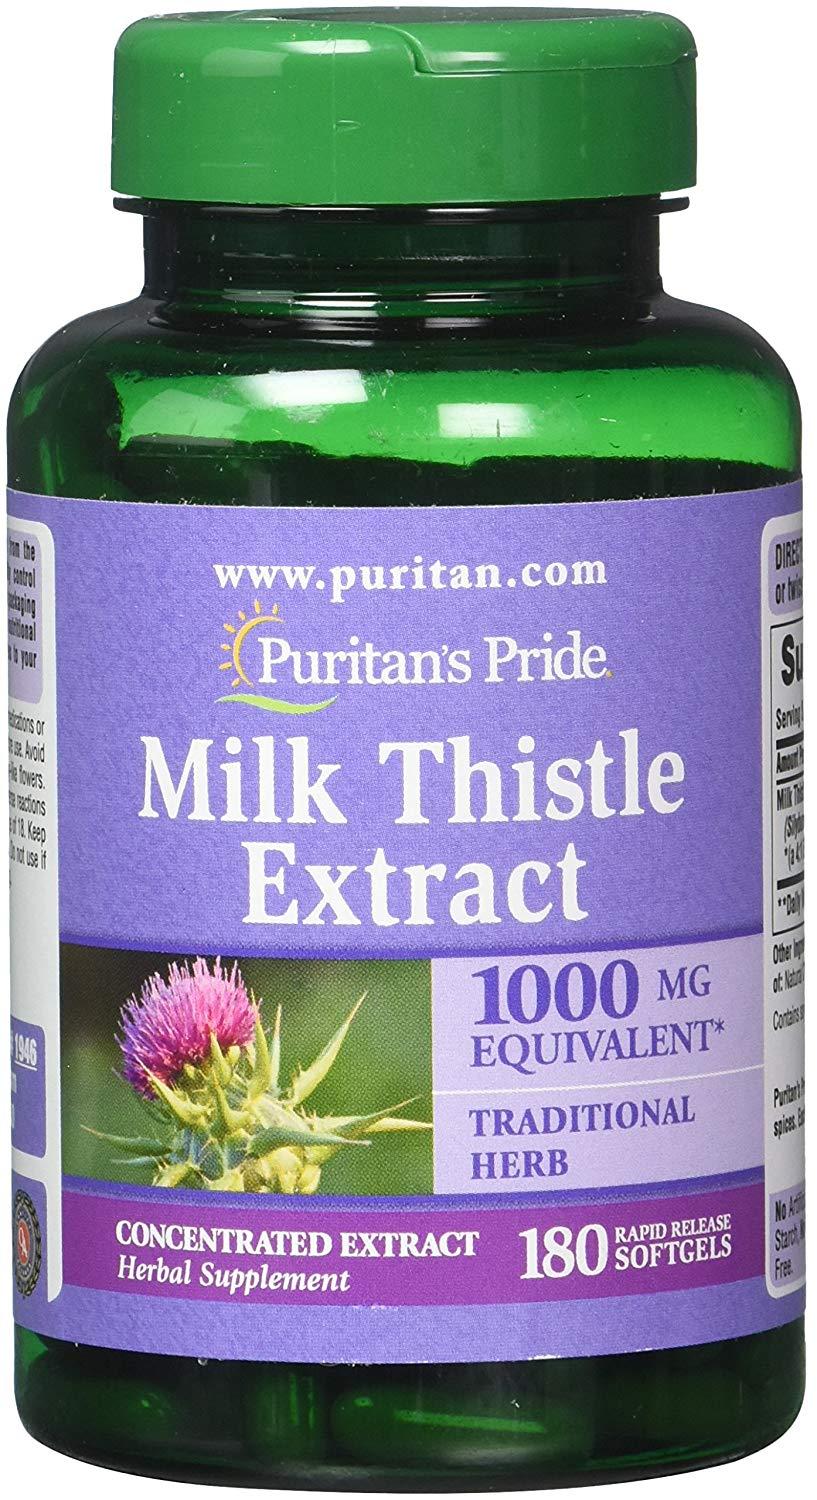 milk-thistle-extract-hang-puritan-pride-1000-mg-5c172bfc100eb-17122018115420